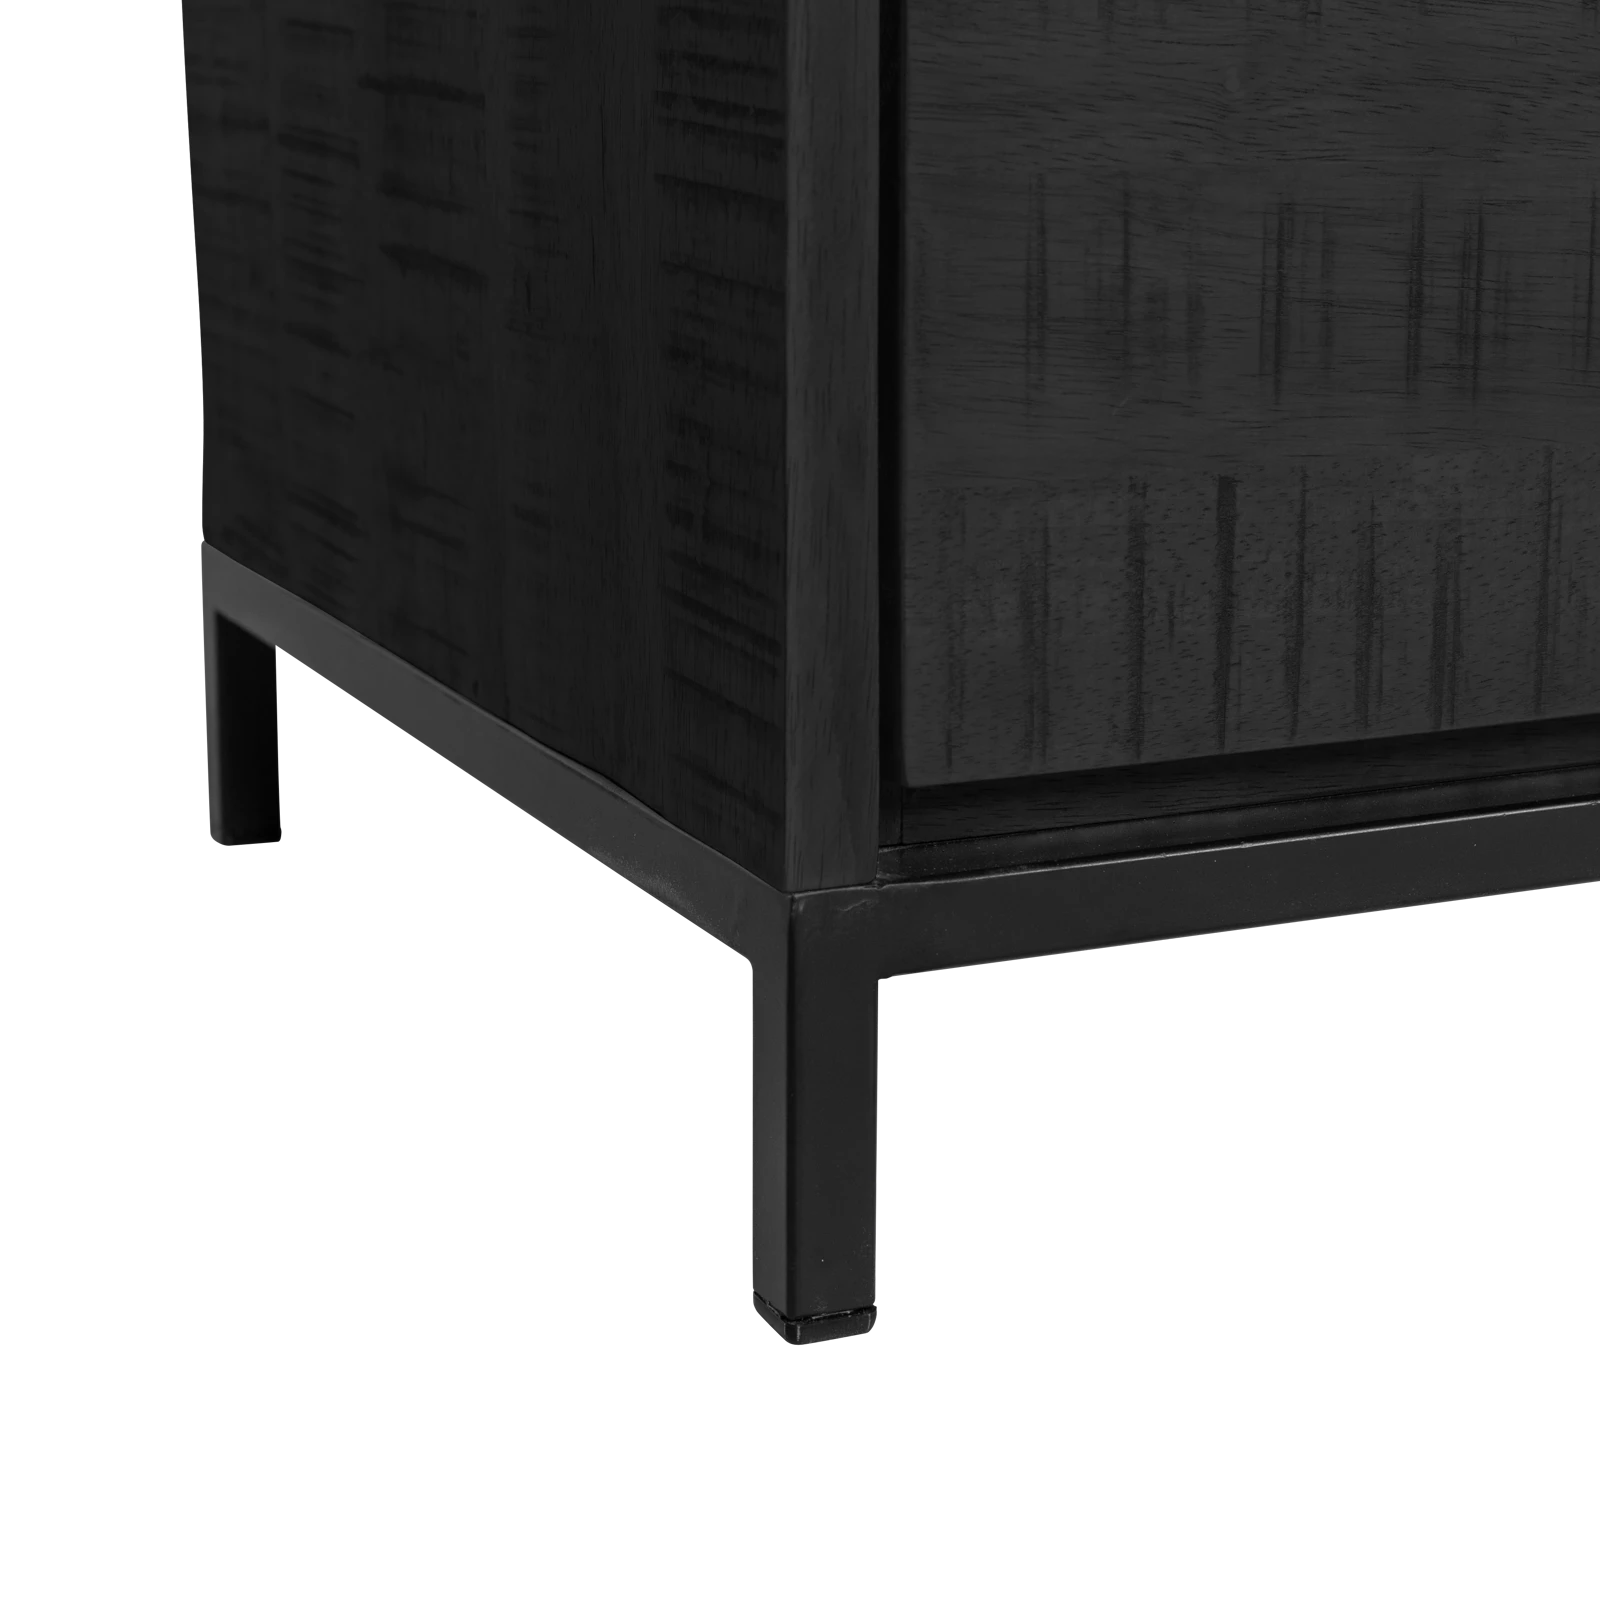 Tv meubel (185cm) Panama - Zwart